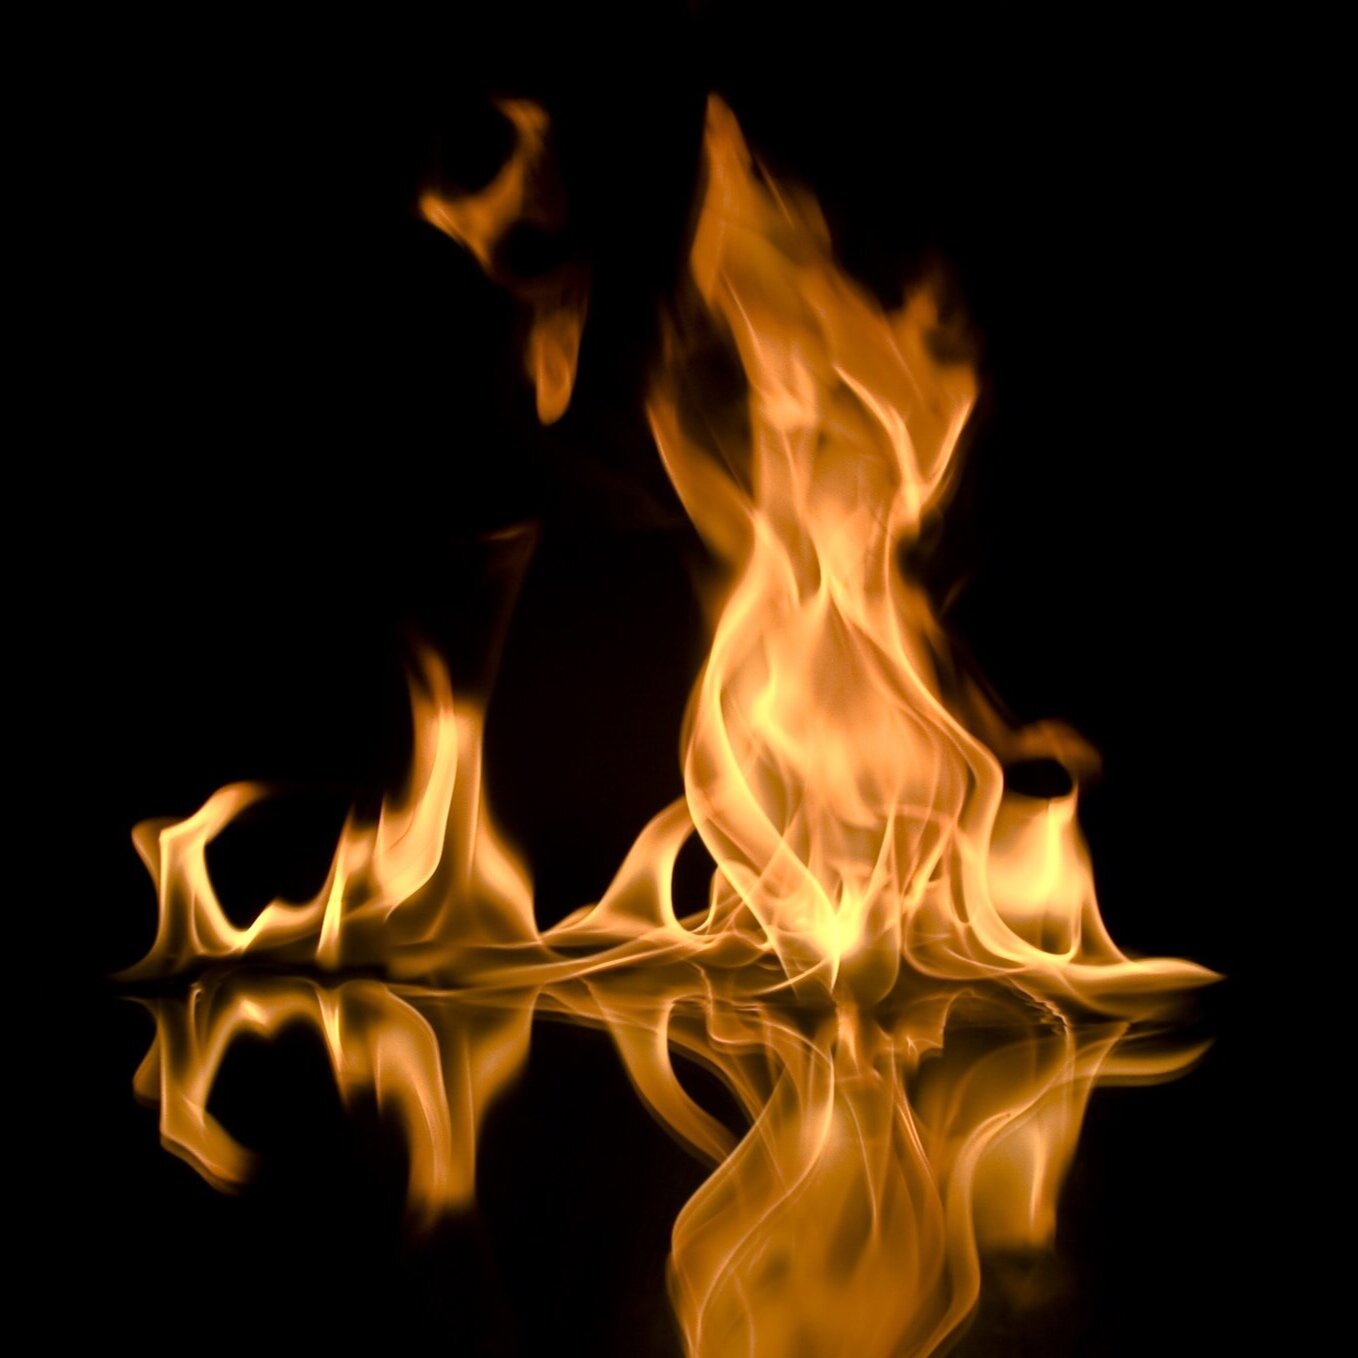 Fire as Symbol of Holy Spirit